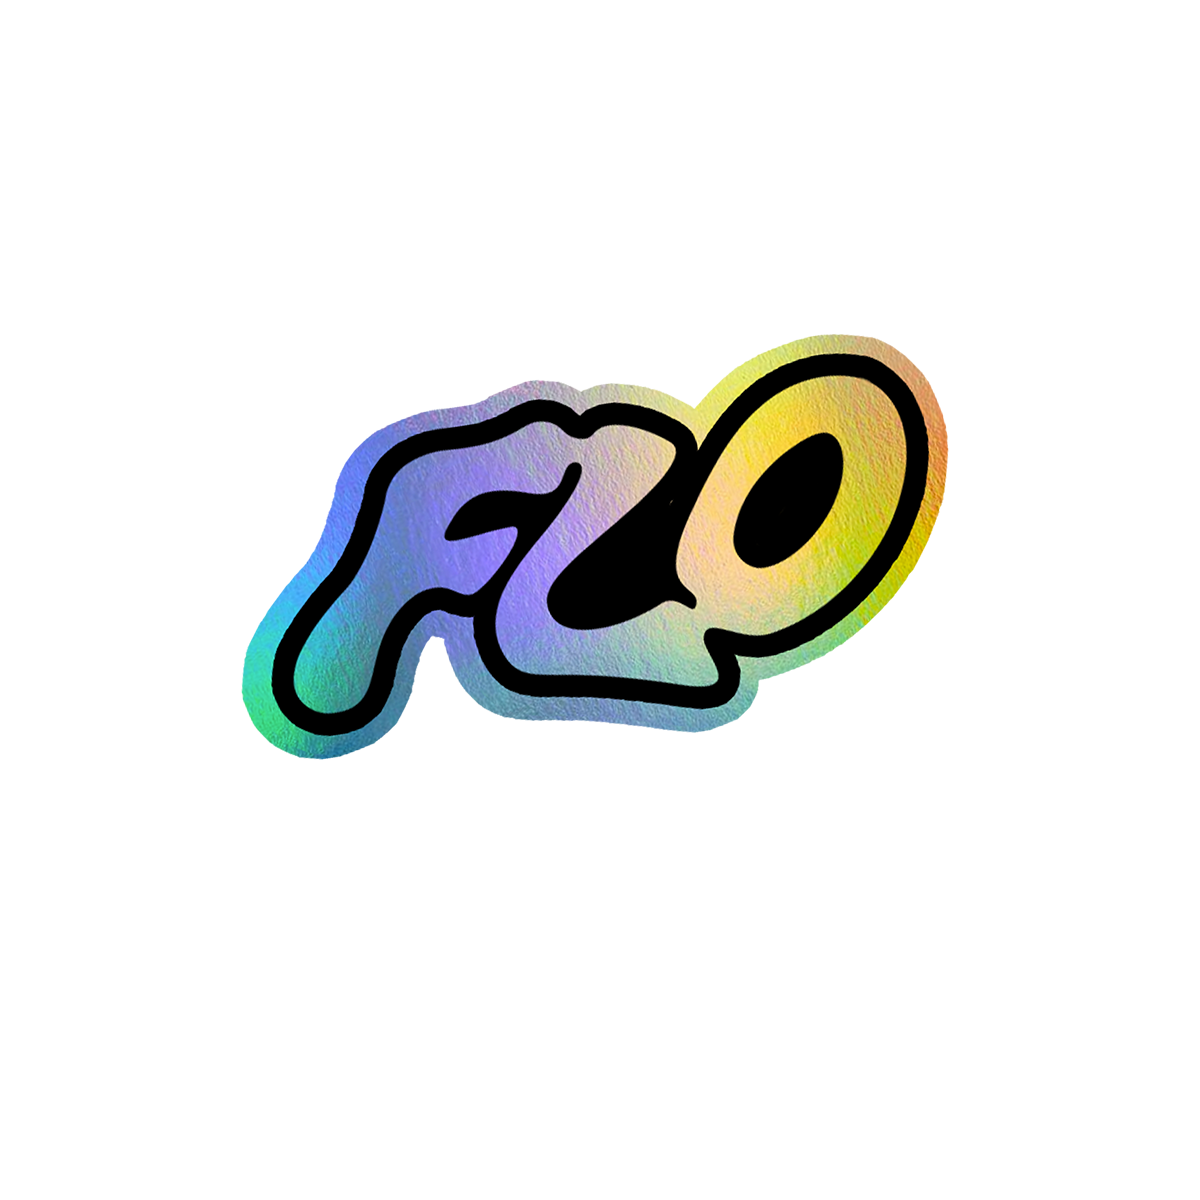 FLO, logo sticker